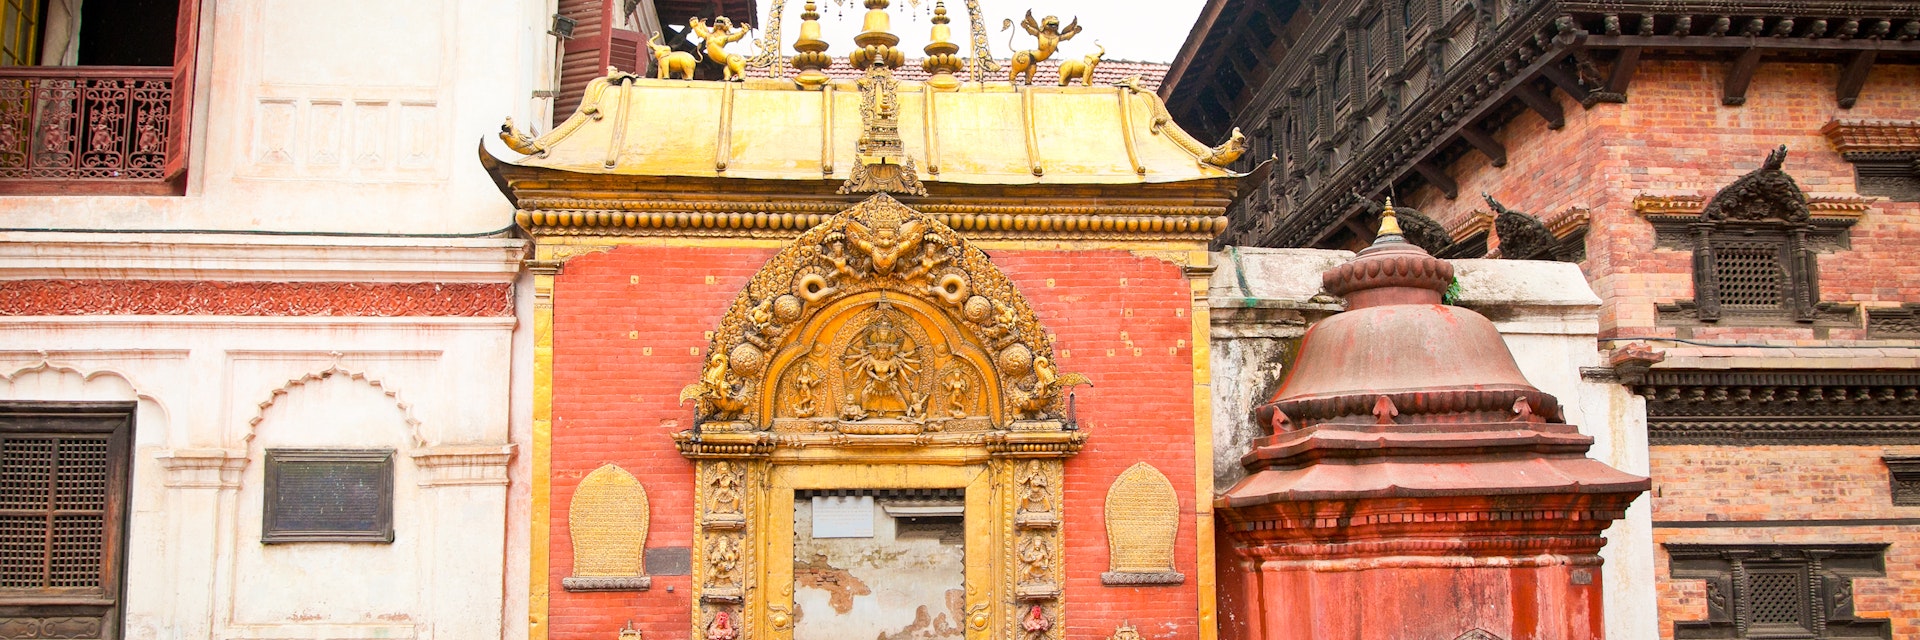 Golden gate at Durbar Square in Bhaktapur, Kathmandu Valley, Nepal.